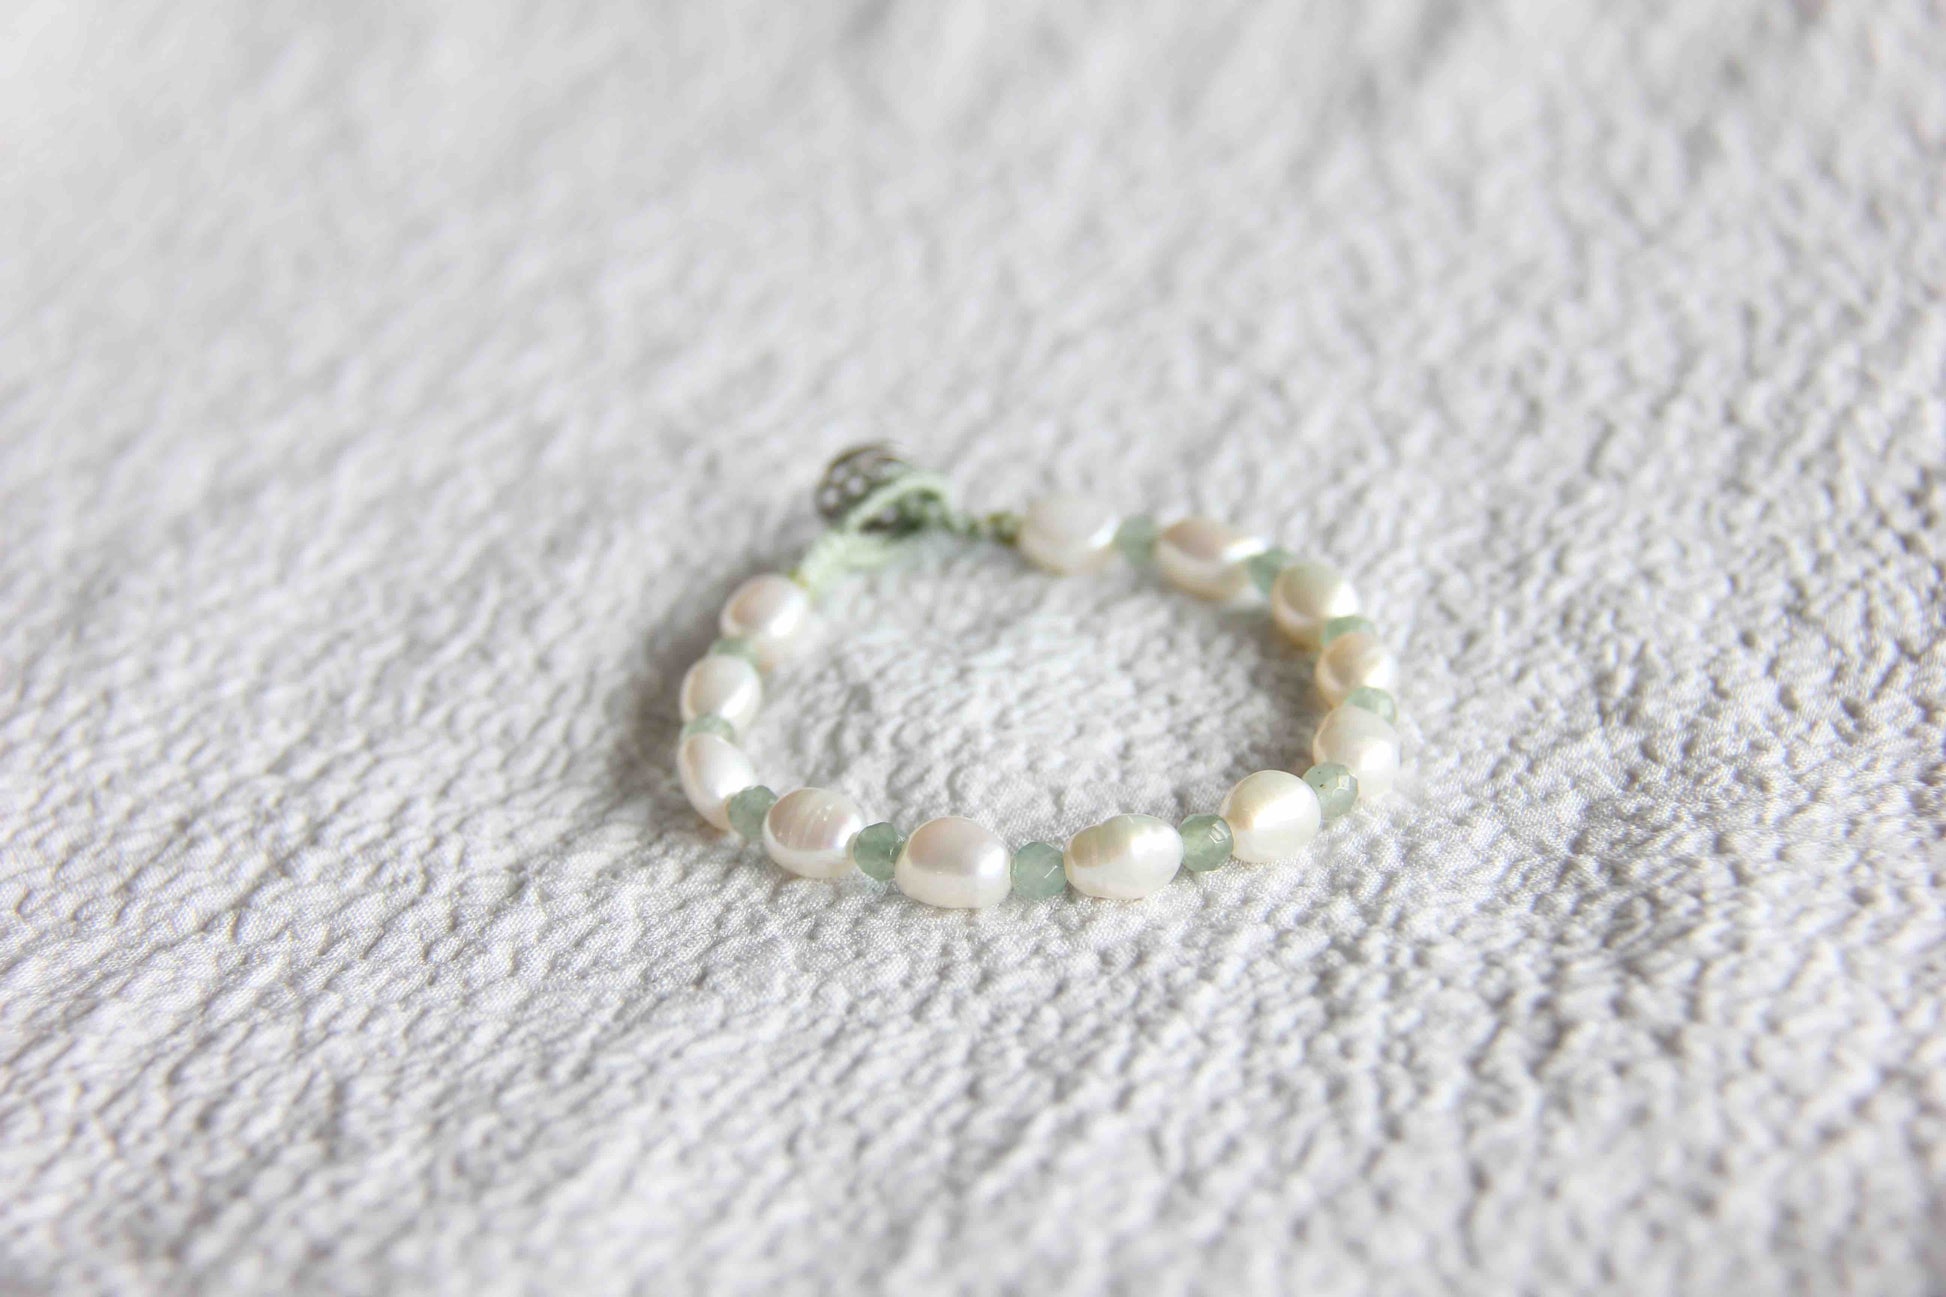 Green Aventurine Pearl Bracelet, Pearl Bracelet, Pearl Jewelry, Gemstone Jewelry, Gemstone Bracelet, Quartz Bracelet